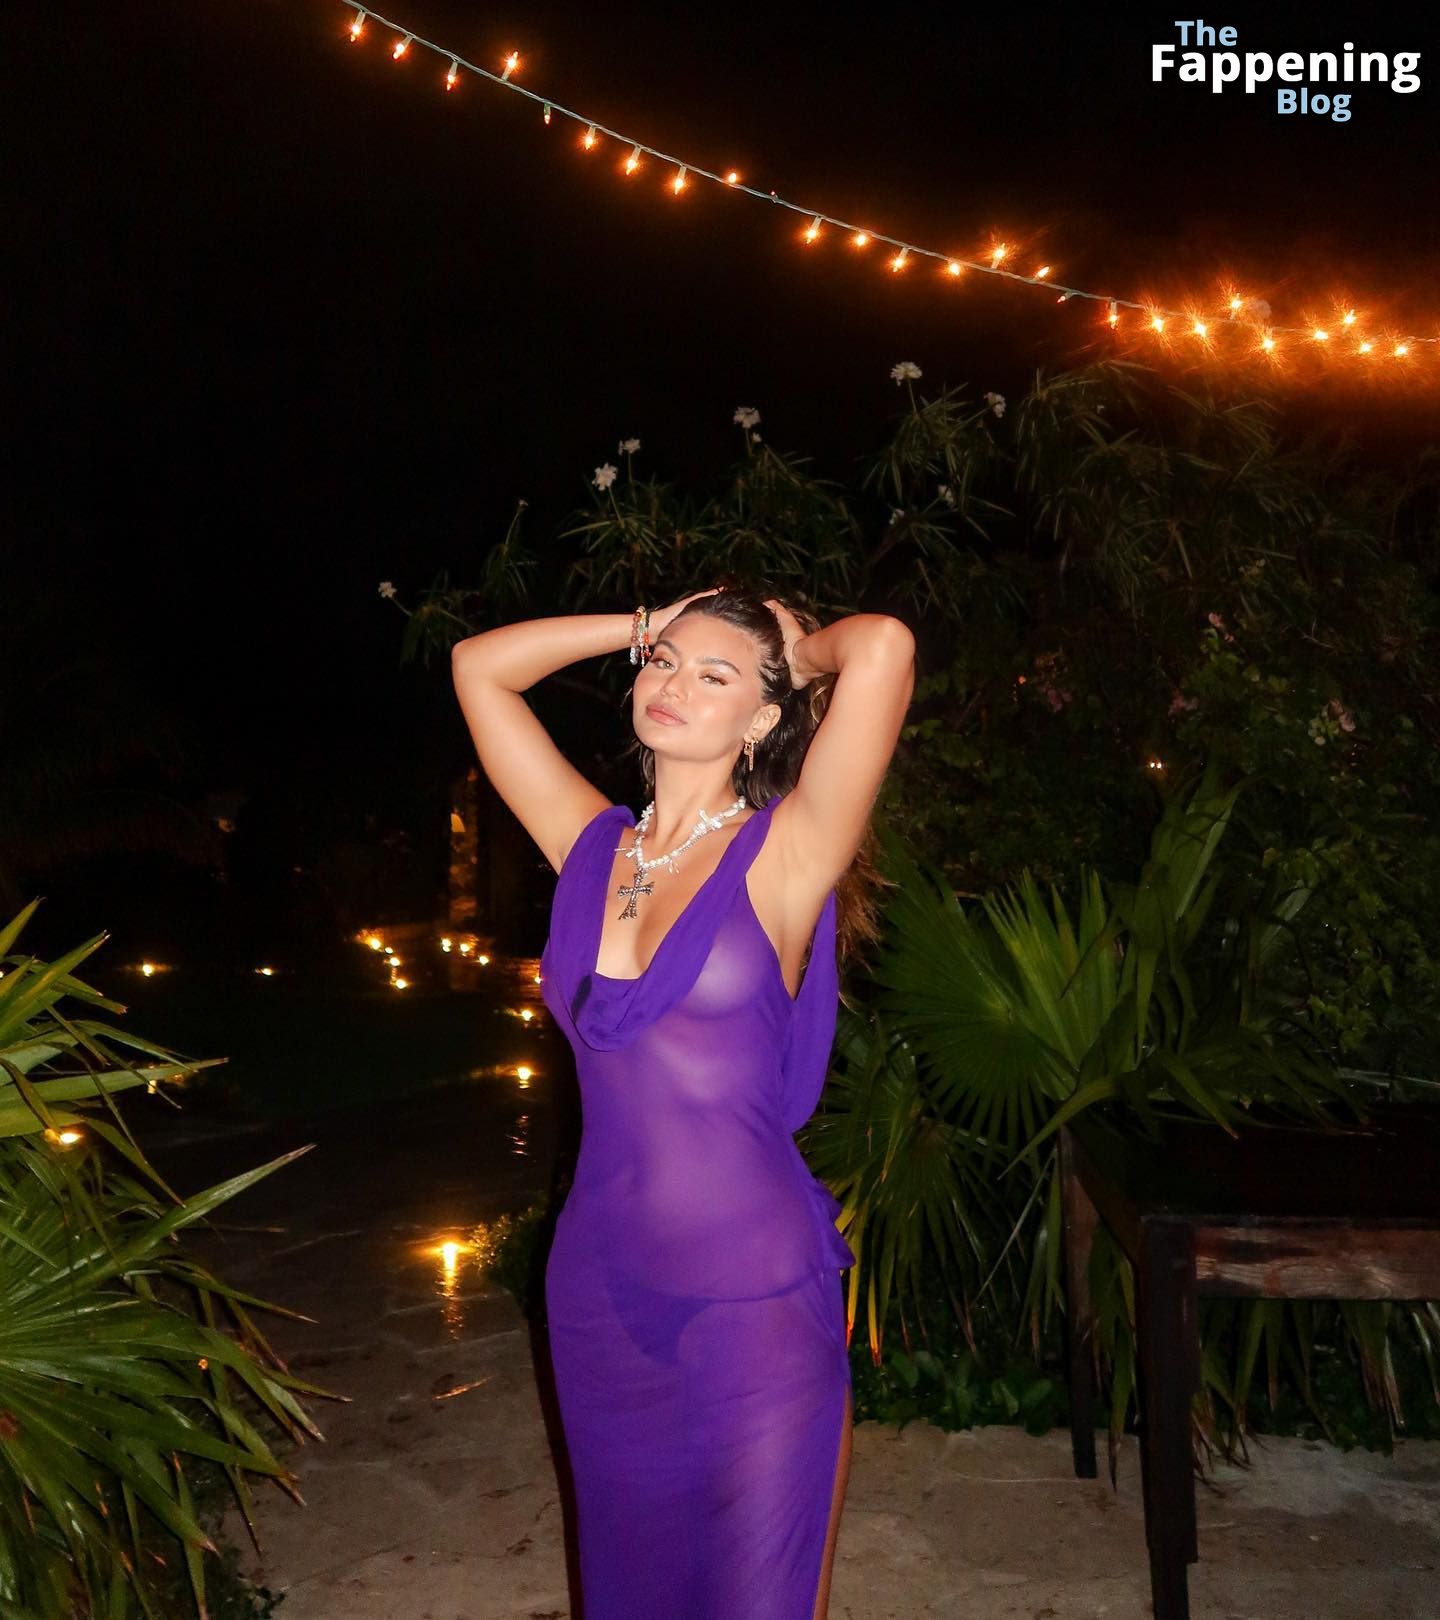 Sofia Jamora Displays Her Curves Posing in a Sheer Dress (14 Photos)